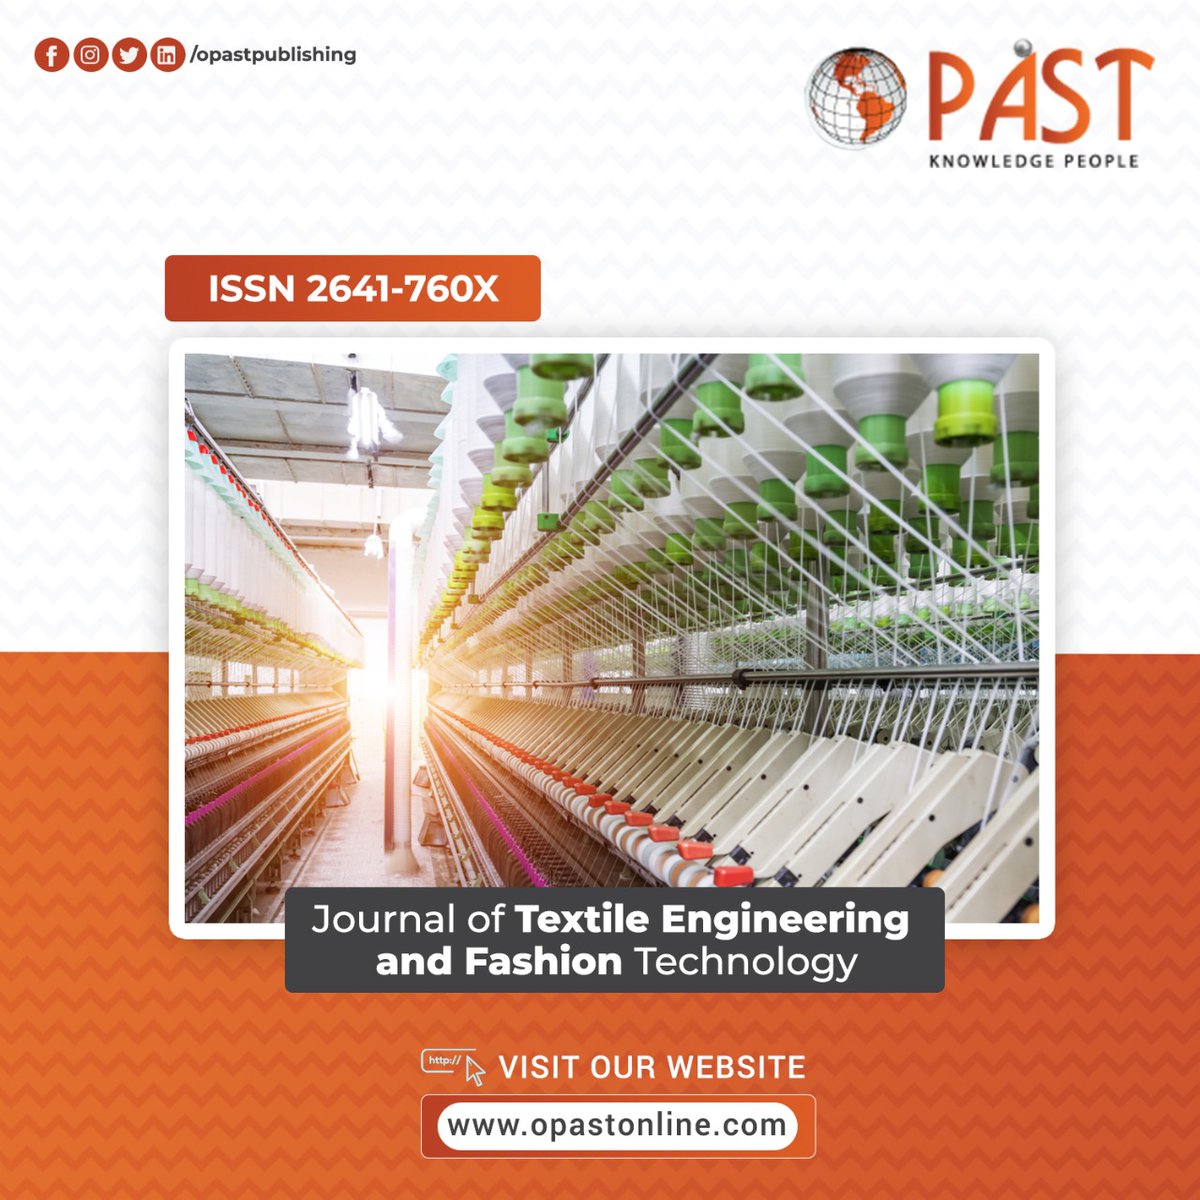 #opastonline #textileengineering #technology #journals #Textile

Journal of Textile Engineering and Fashion Technology
ISSN: 2641-760X

Visit Web: opastonline.com/journal/journa…